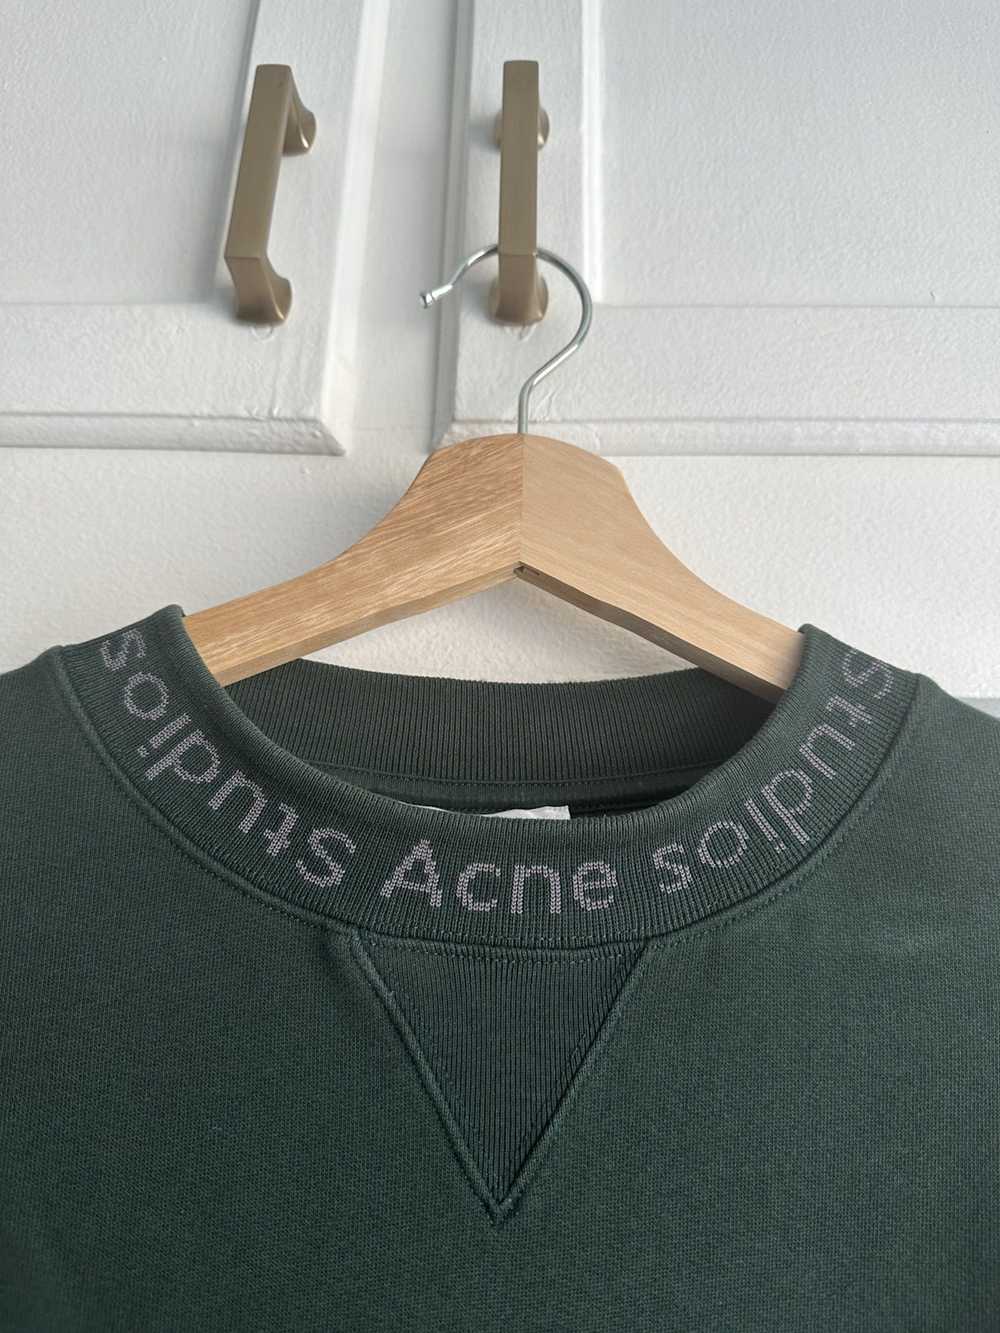 Acne Studios ACNE STUDIO FOREST GREEN SWEATSHIRT - image 2